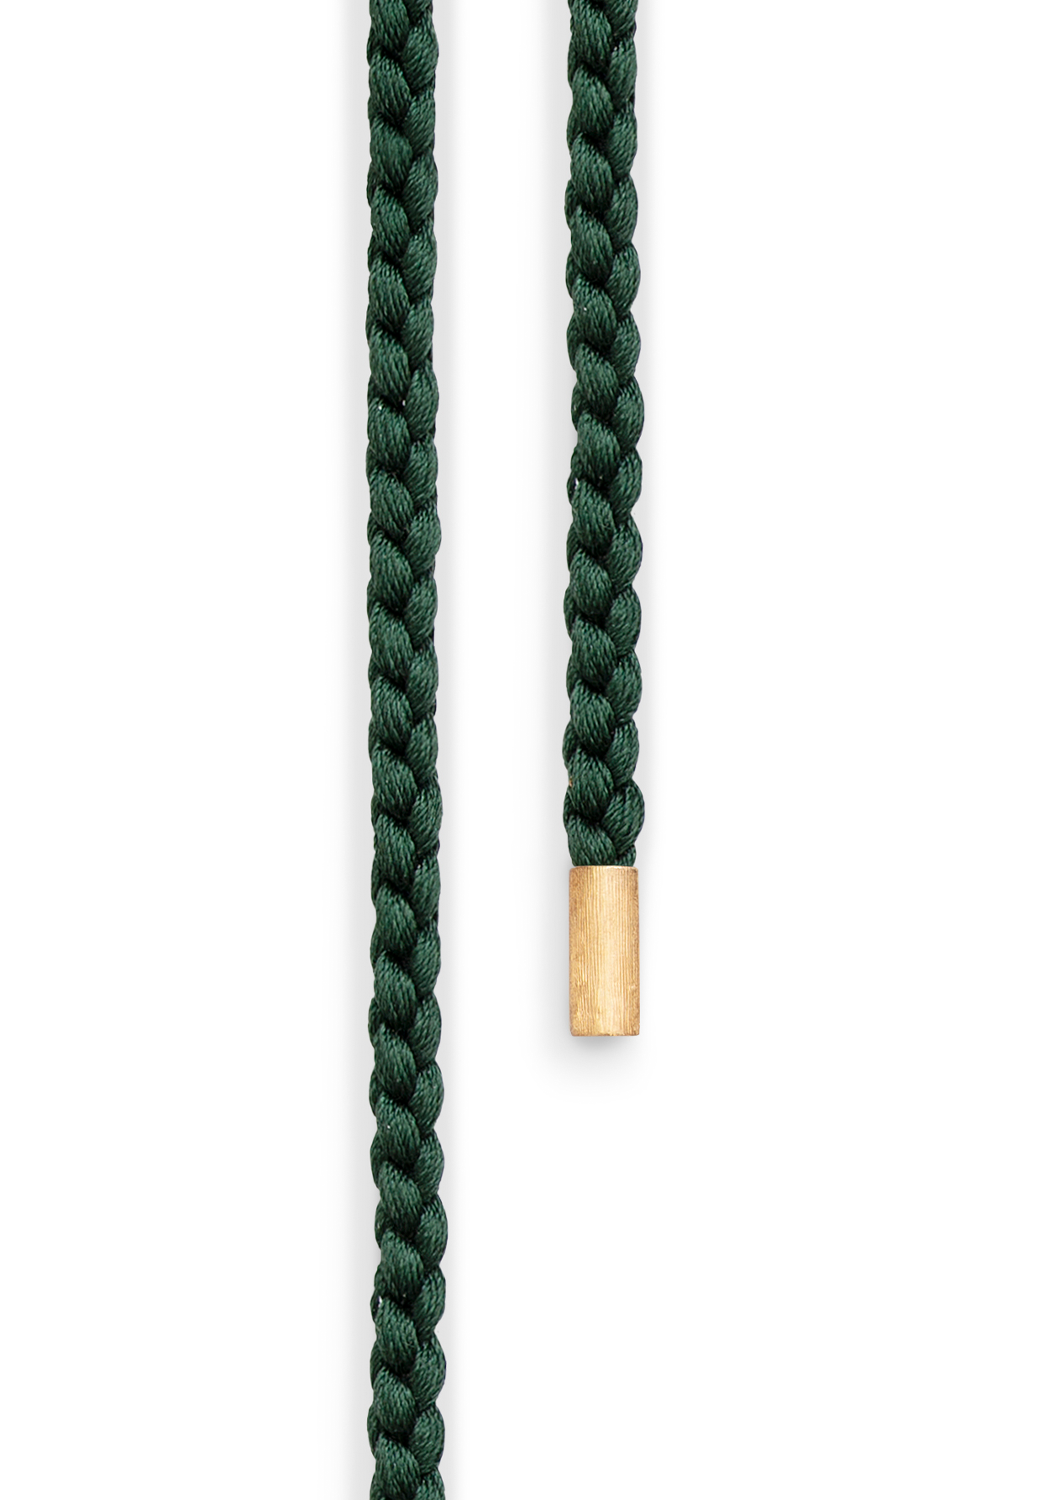 Ole Lynggaard Twisted Mokuba 18KYG Dark Green Silk String Wrap | A1908-409 | OsterJewelers.com